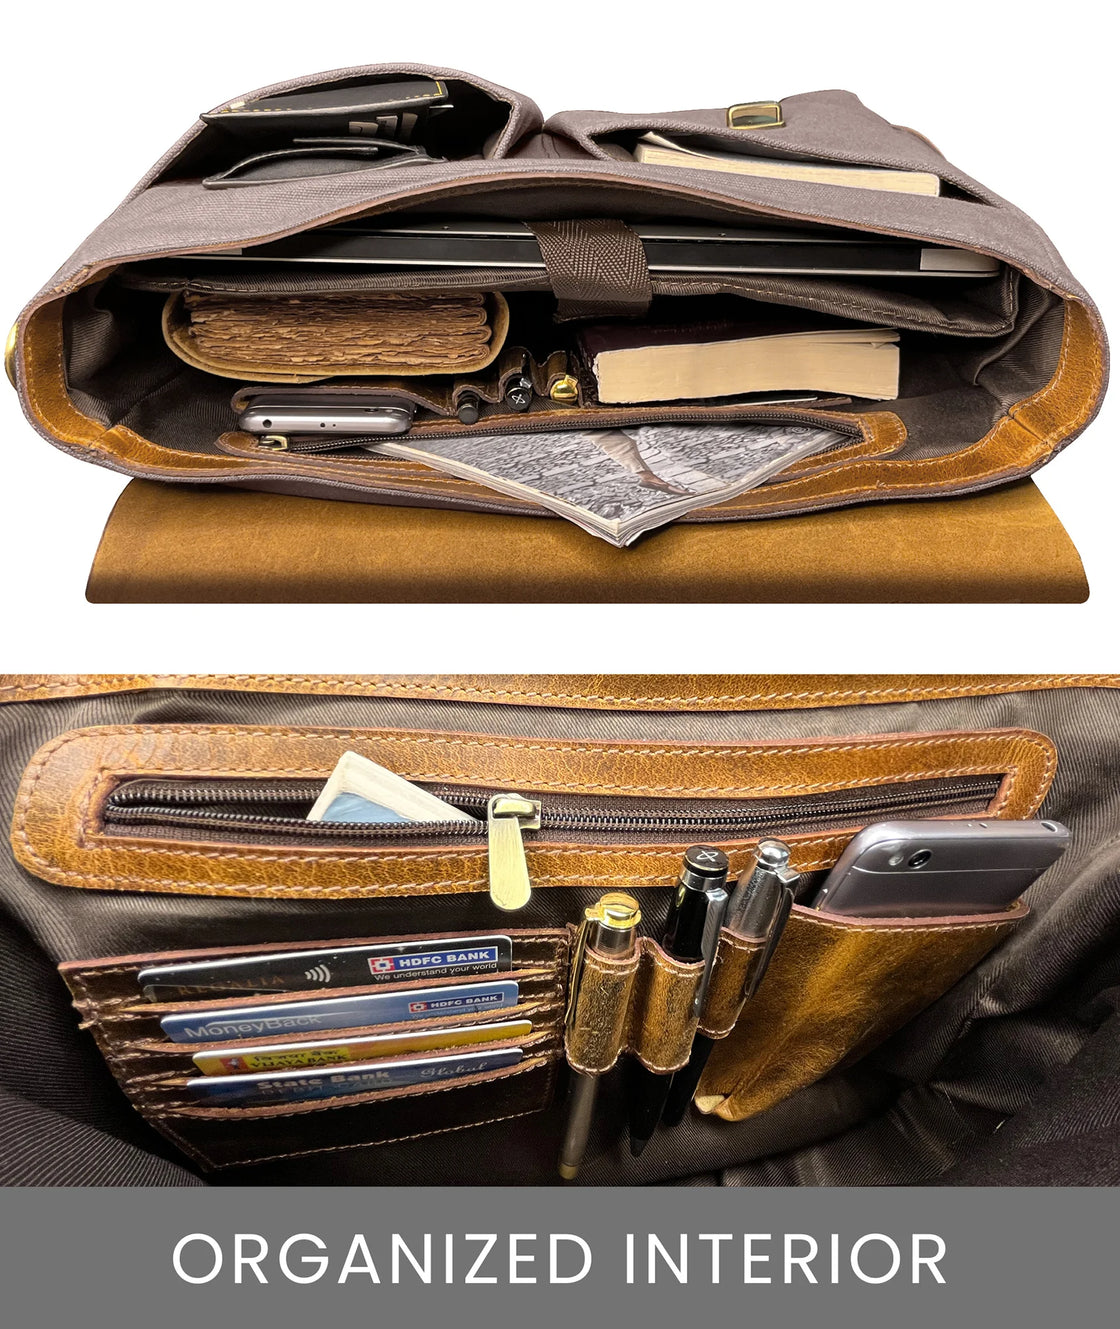 Rover Leather Canvas Messenger Bag Briefcase Laptop Bag (Dark Grey)